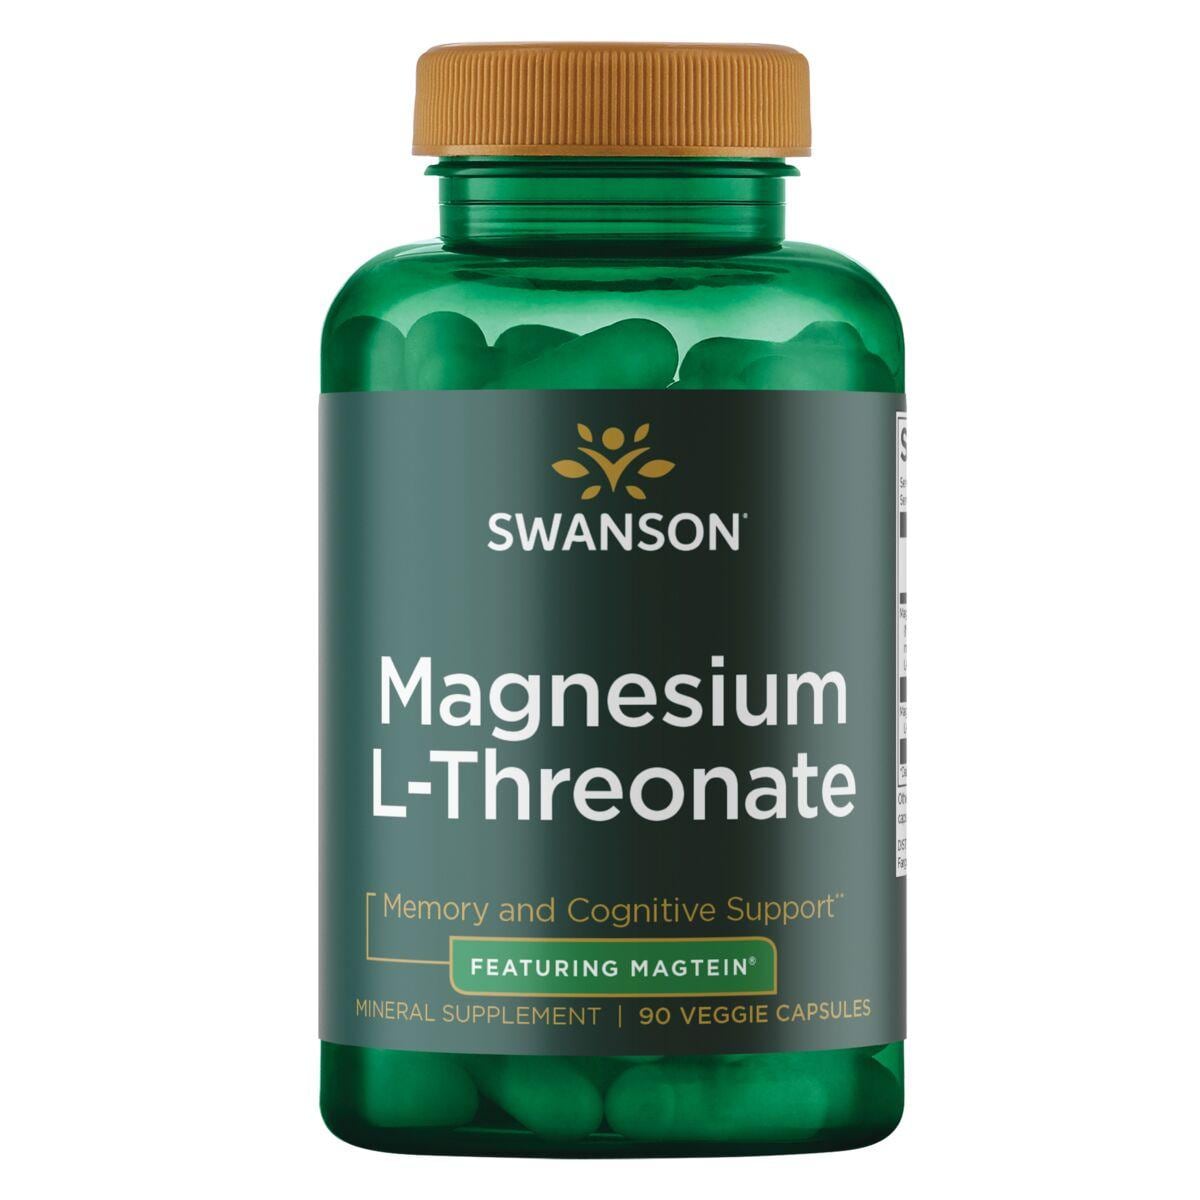 Swanson Ultra Magnesium L-Threonate - Featuring Magtein Vitamin | 90 Veg Caps